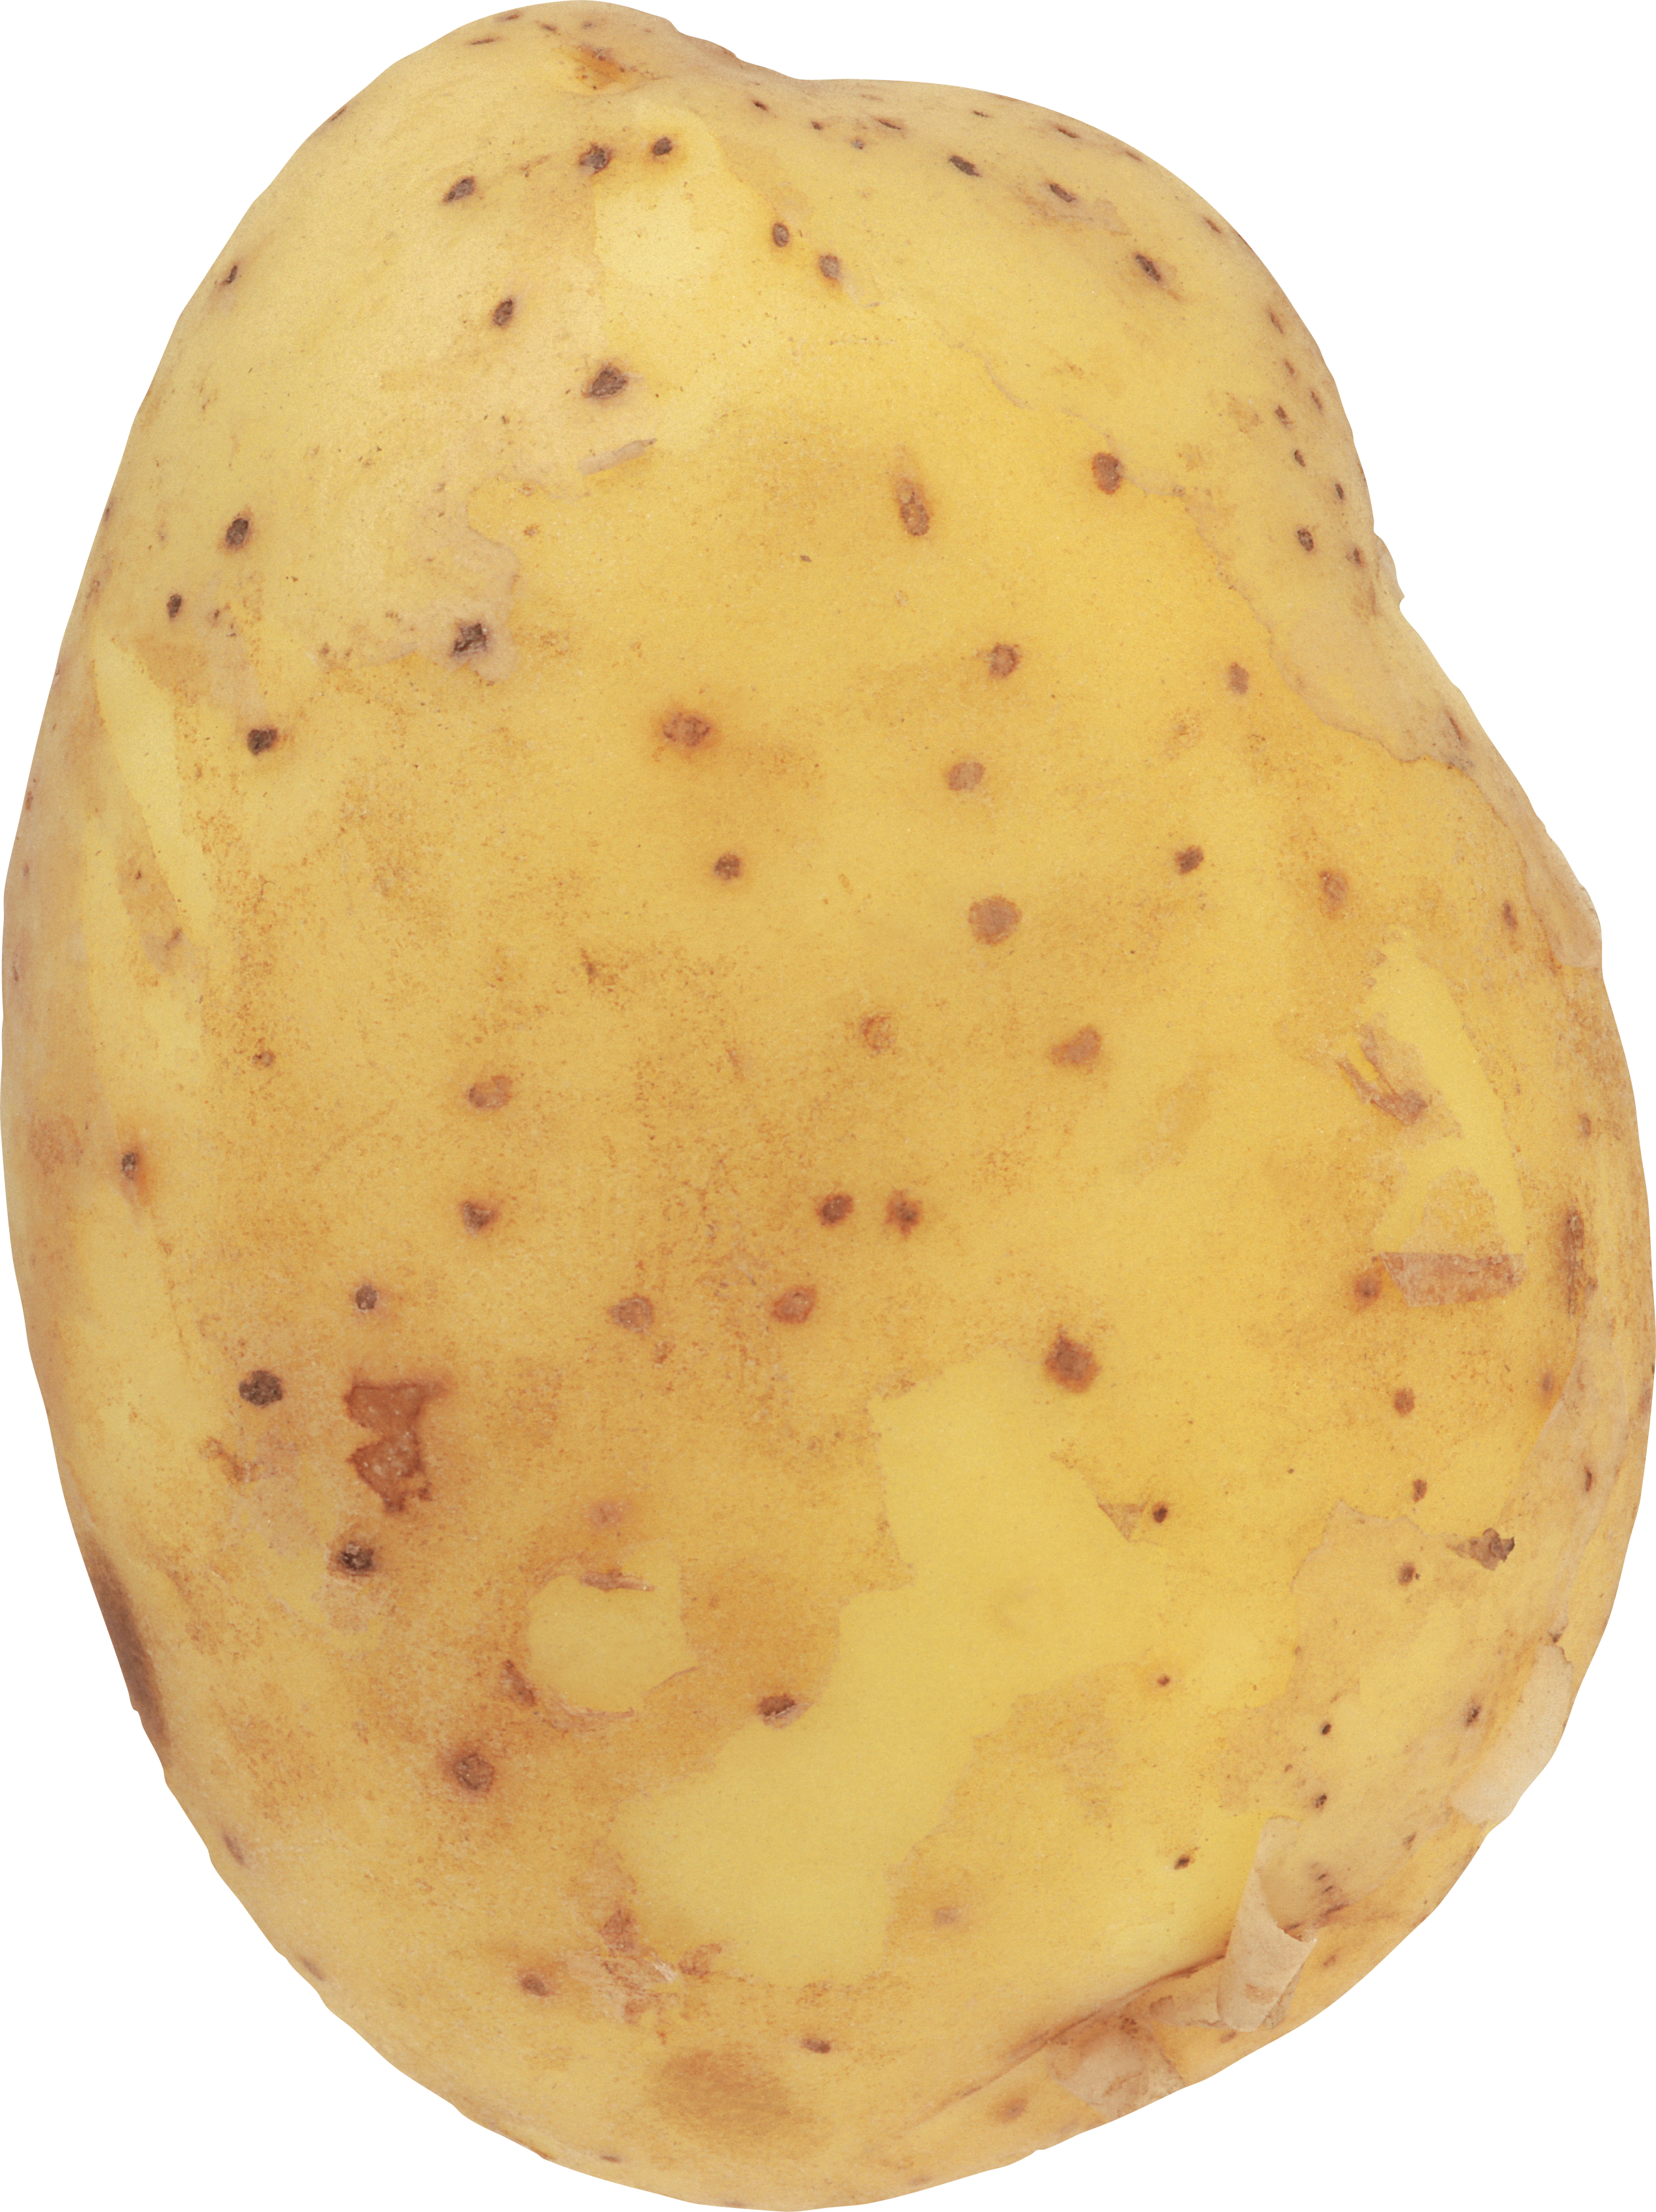 Download PNG image - Potato P